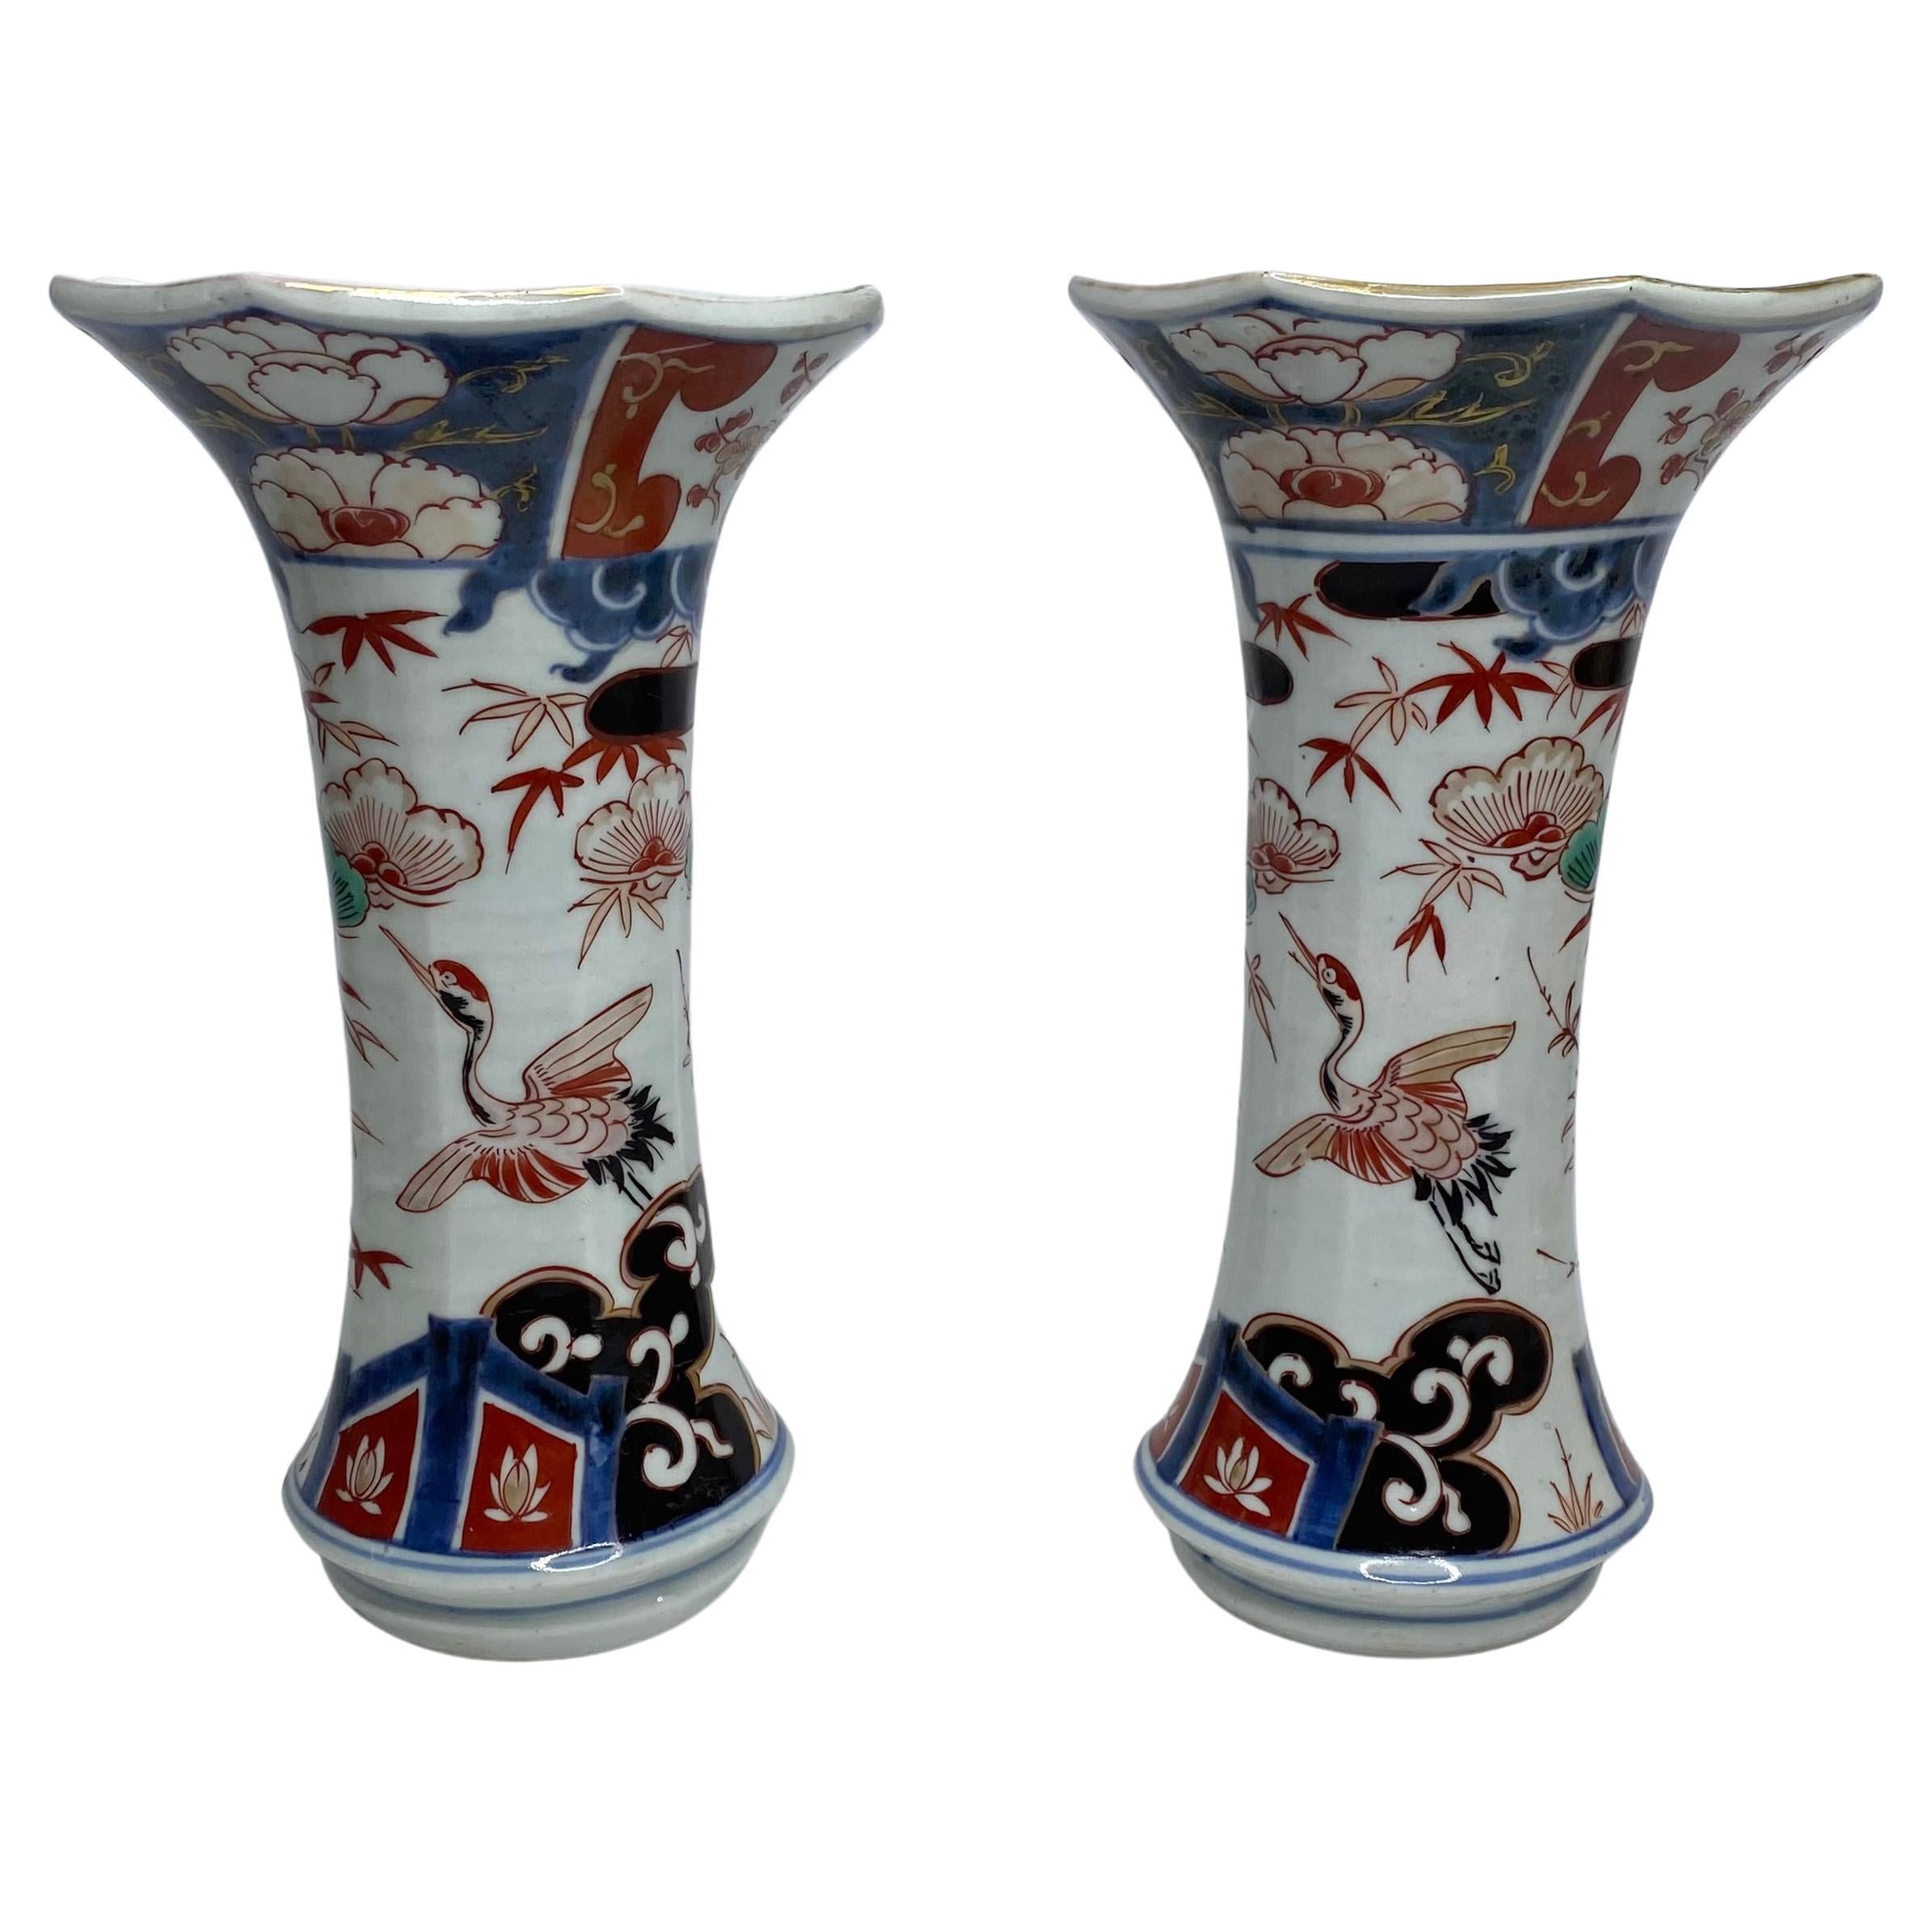 https://a.1stdibscdn.com/pair-imari-porcelain-vases-arita-japan-c-1700-genryoku-period-for-sale/f_43971/f_355484321691085134289/f_35548432_1691085135191_bg_processed.jpg